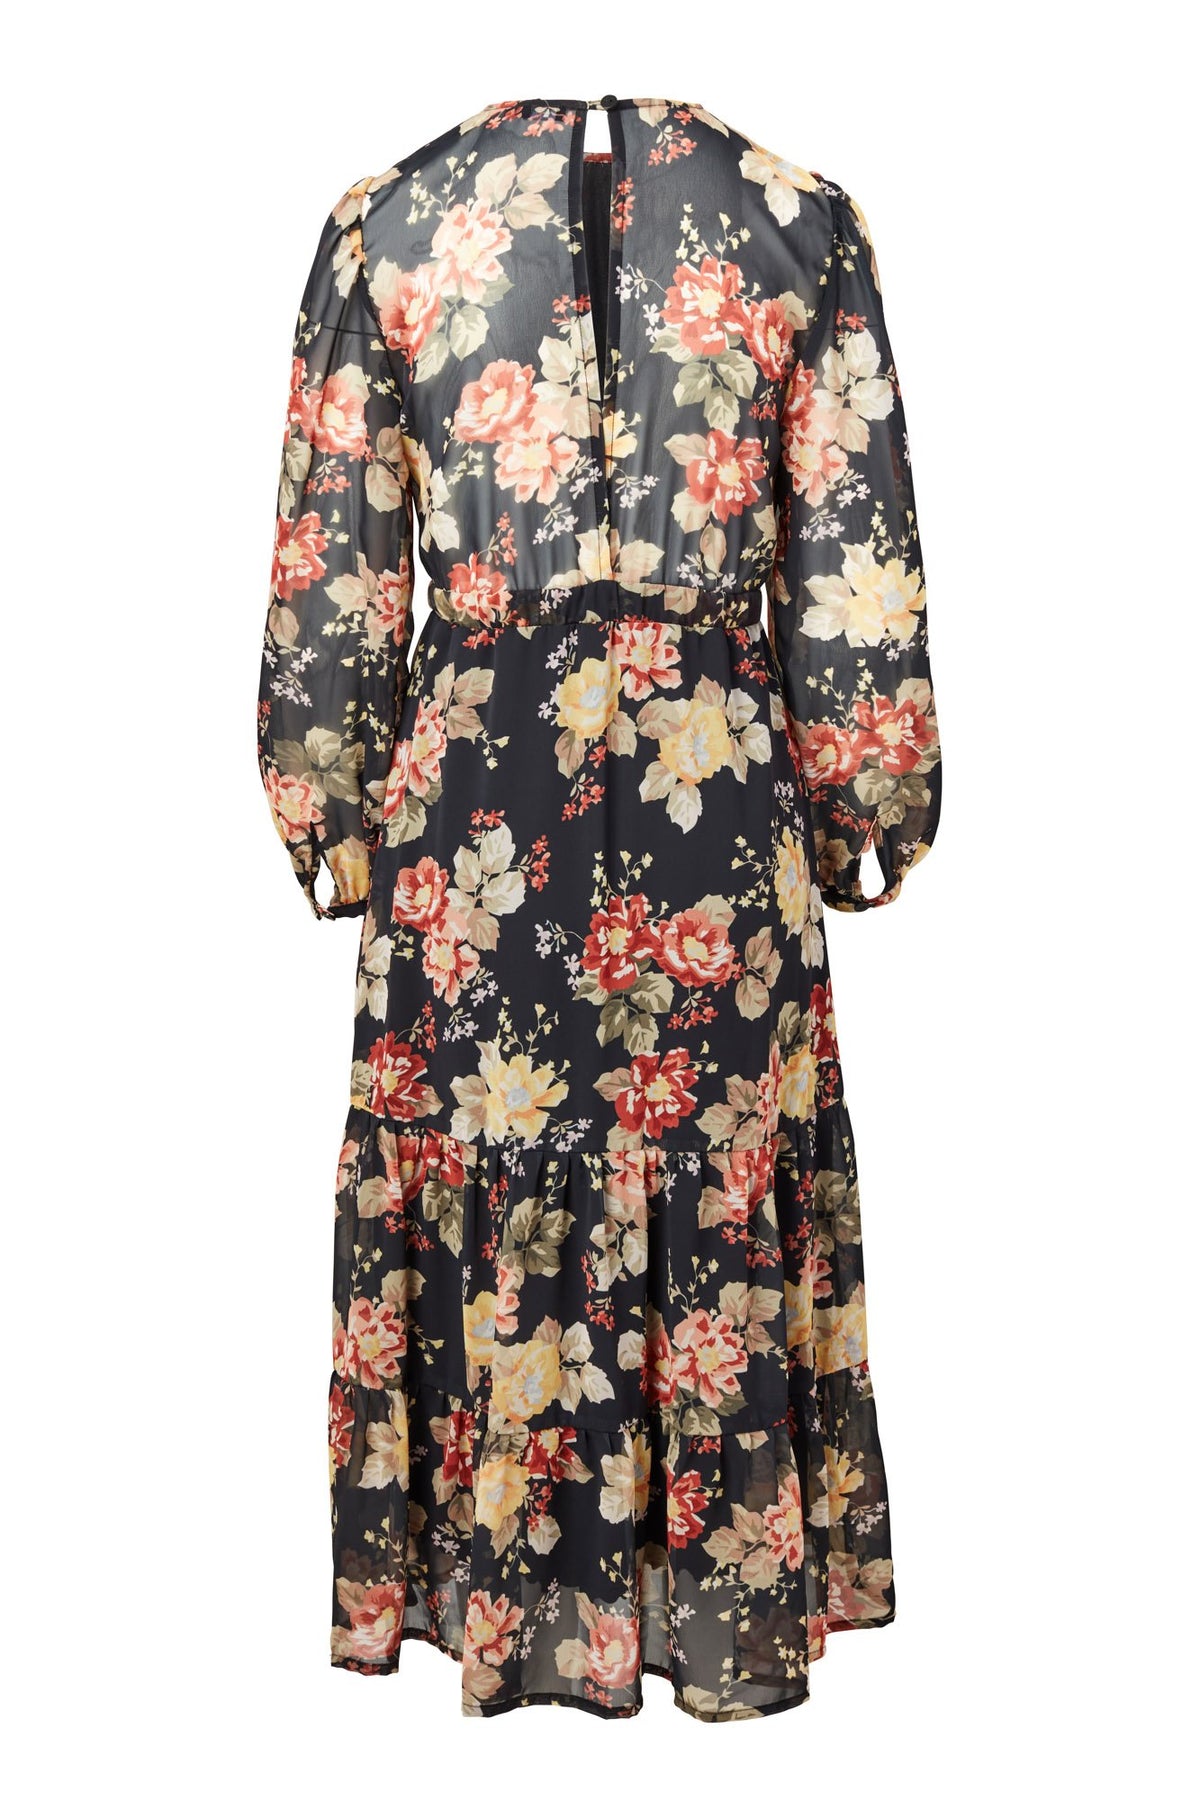 Annecy Dark Floral Midi Dress